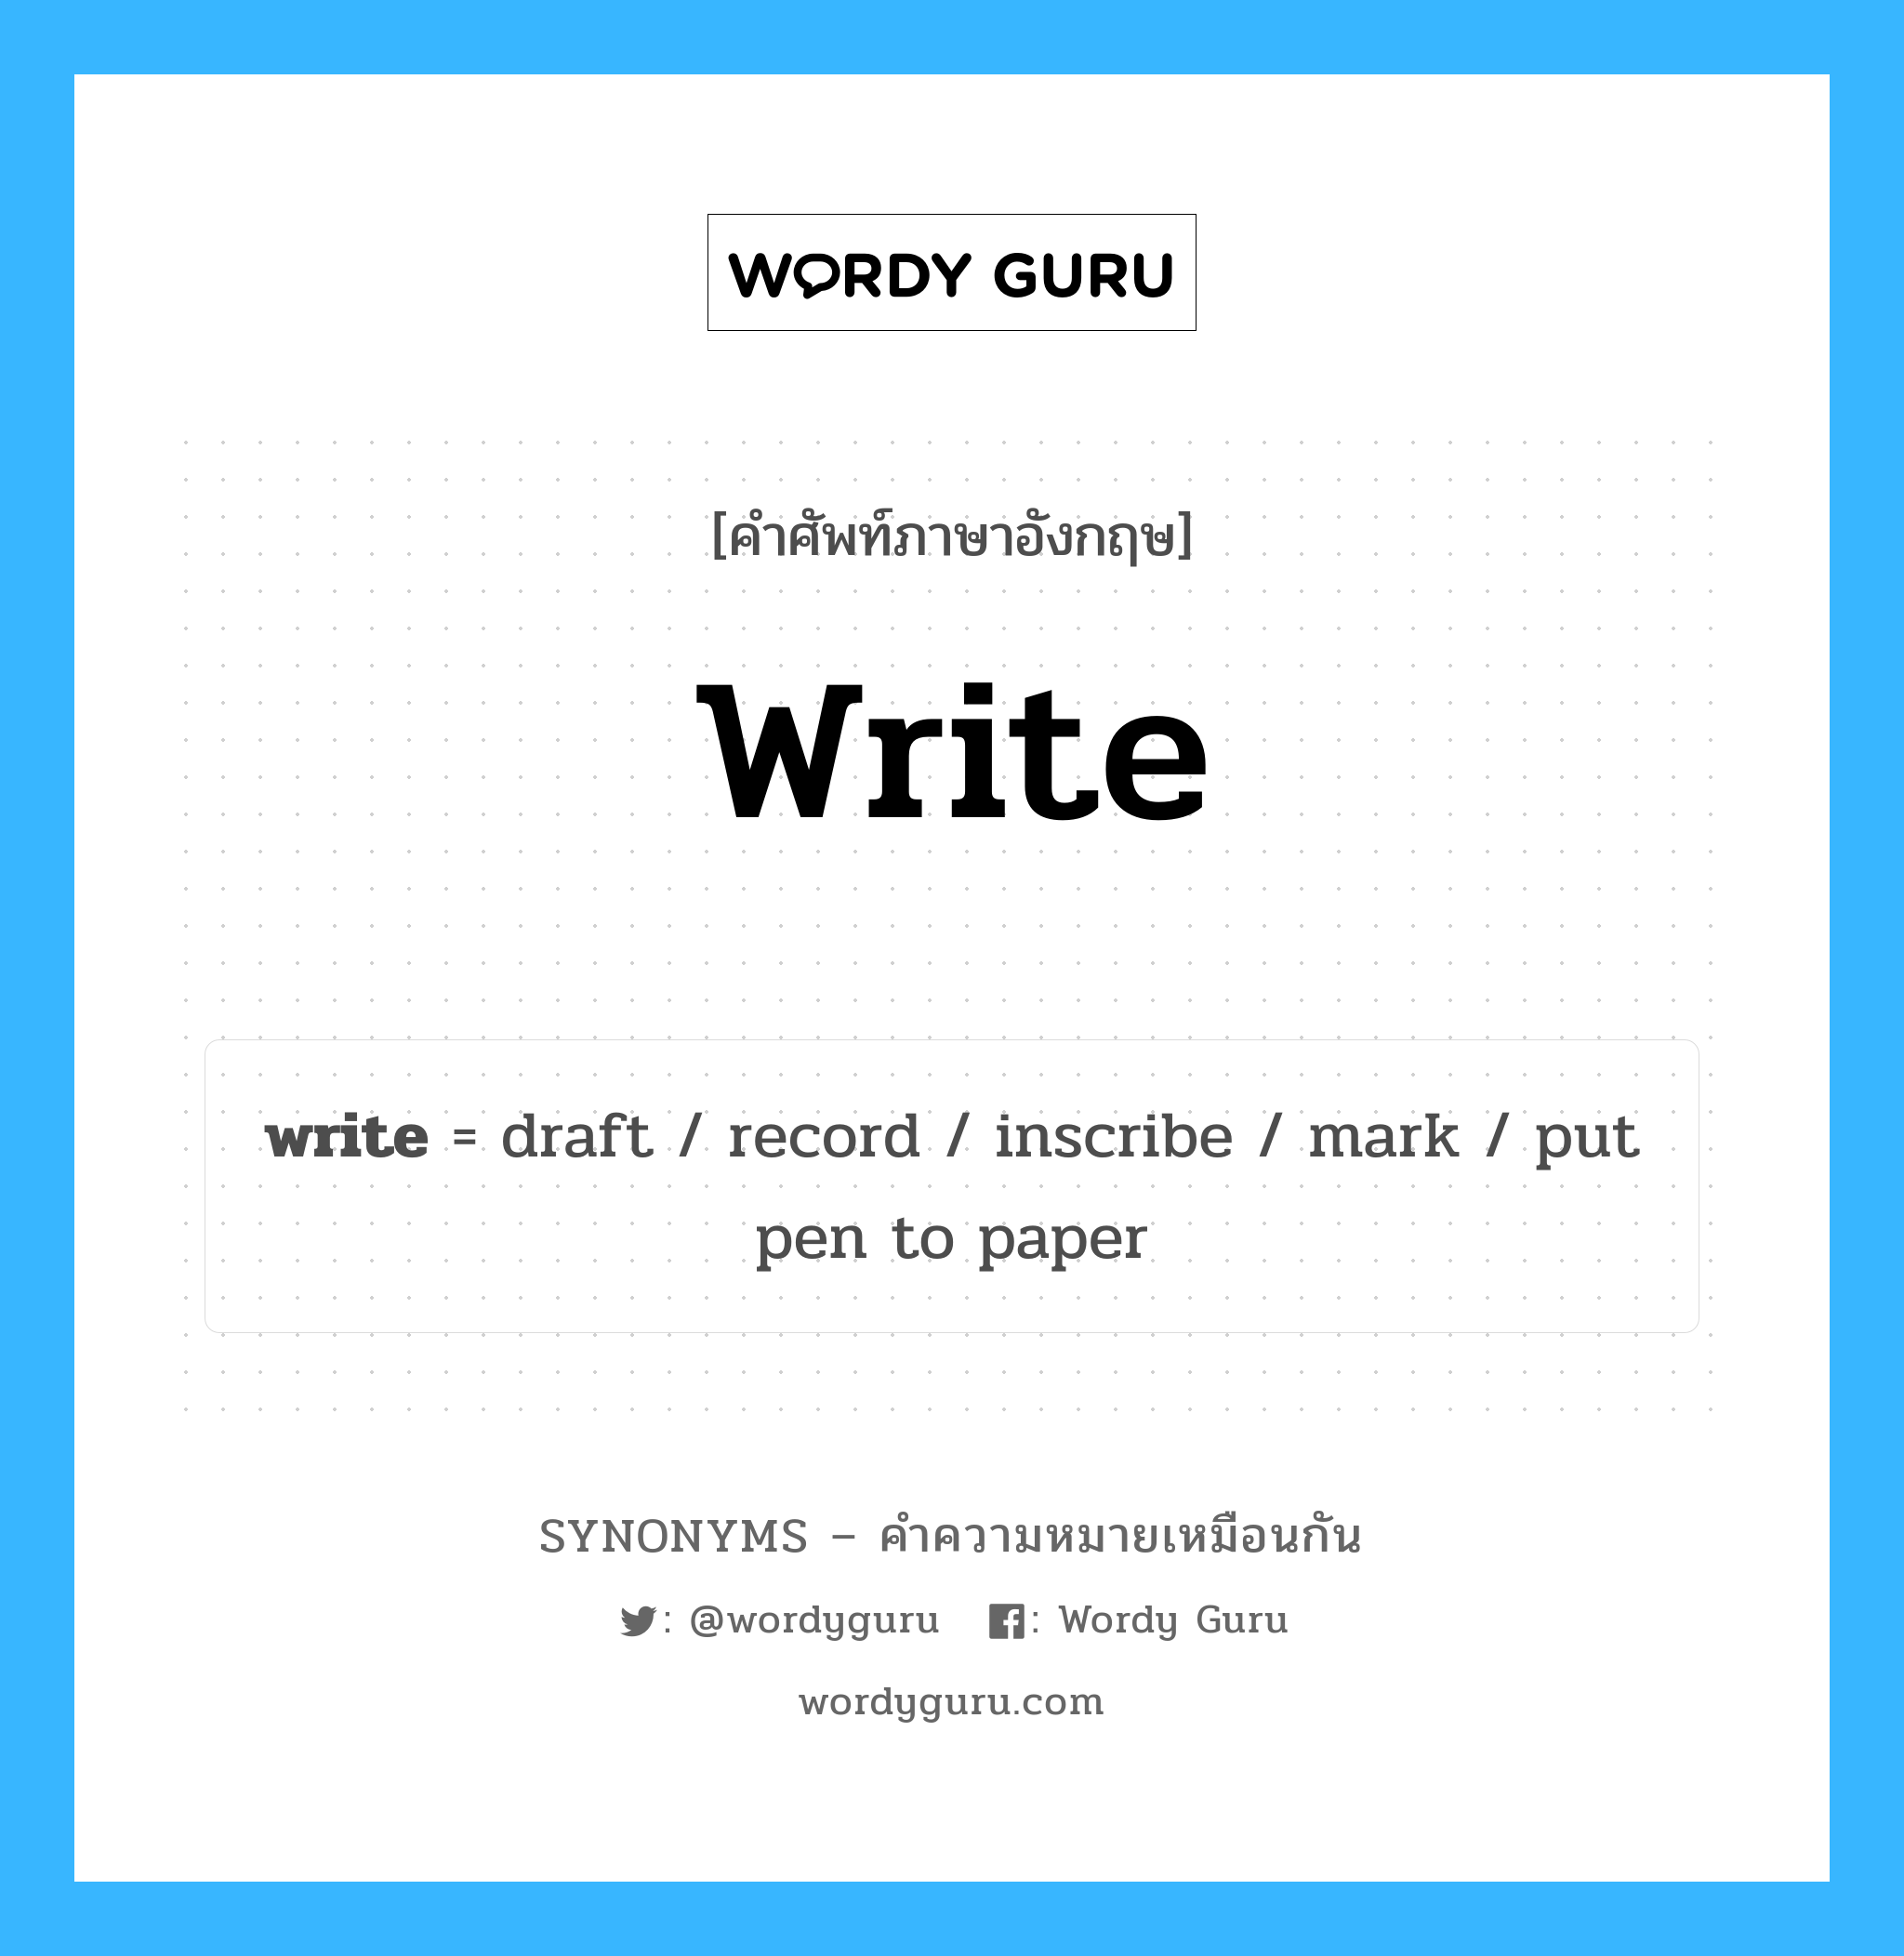 inscribe เป็นหนึ่งใน write และมีคำอื่น ๆ อีกดังนี้, คำศัพท์ภาษาอังกฤษ inscribe ความหมายคล้ายกันกับ write แปลว่า จารึก หมวด write